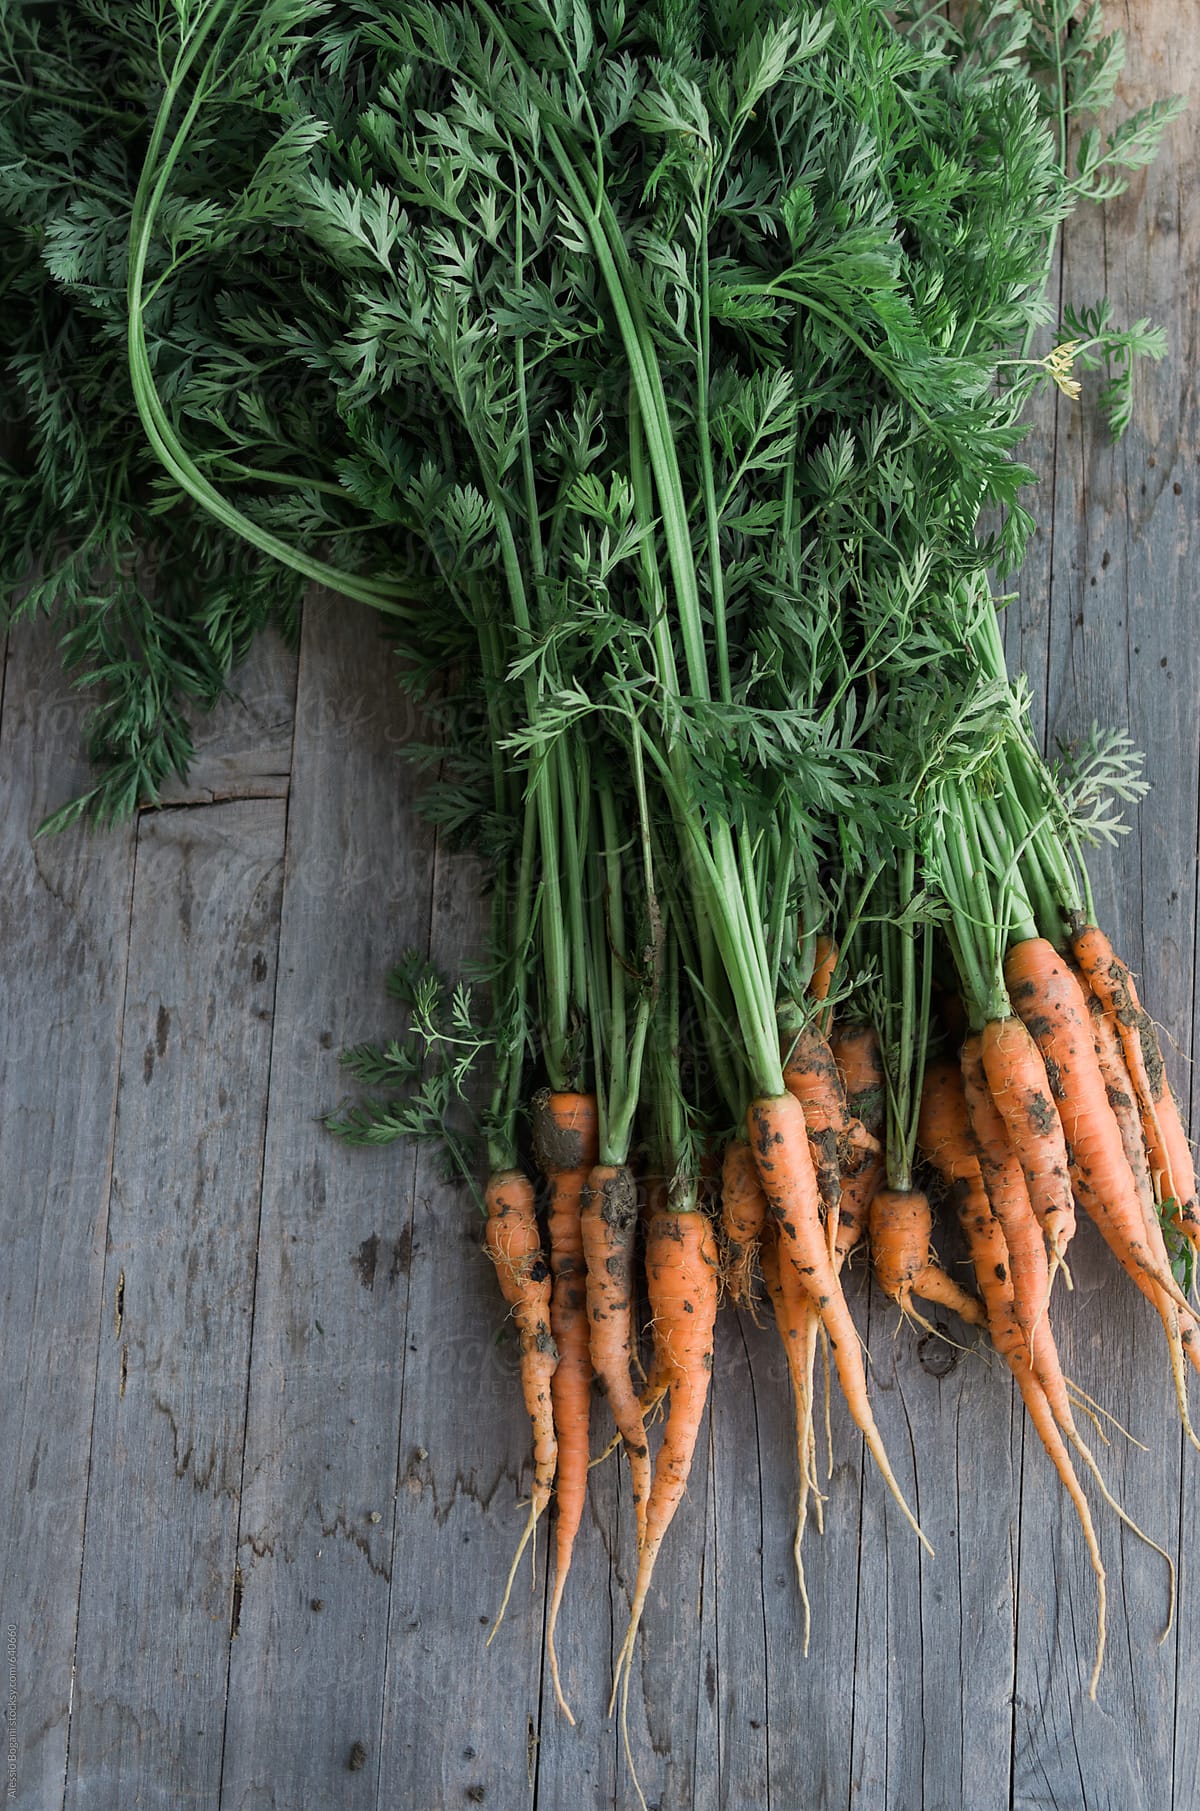 Fresh raw carrots